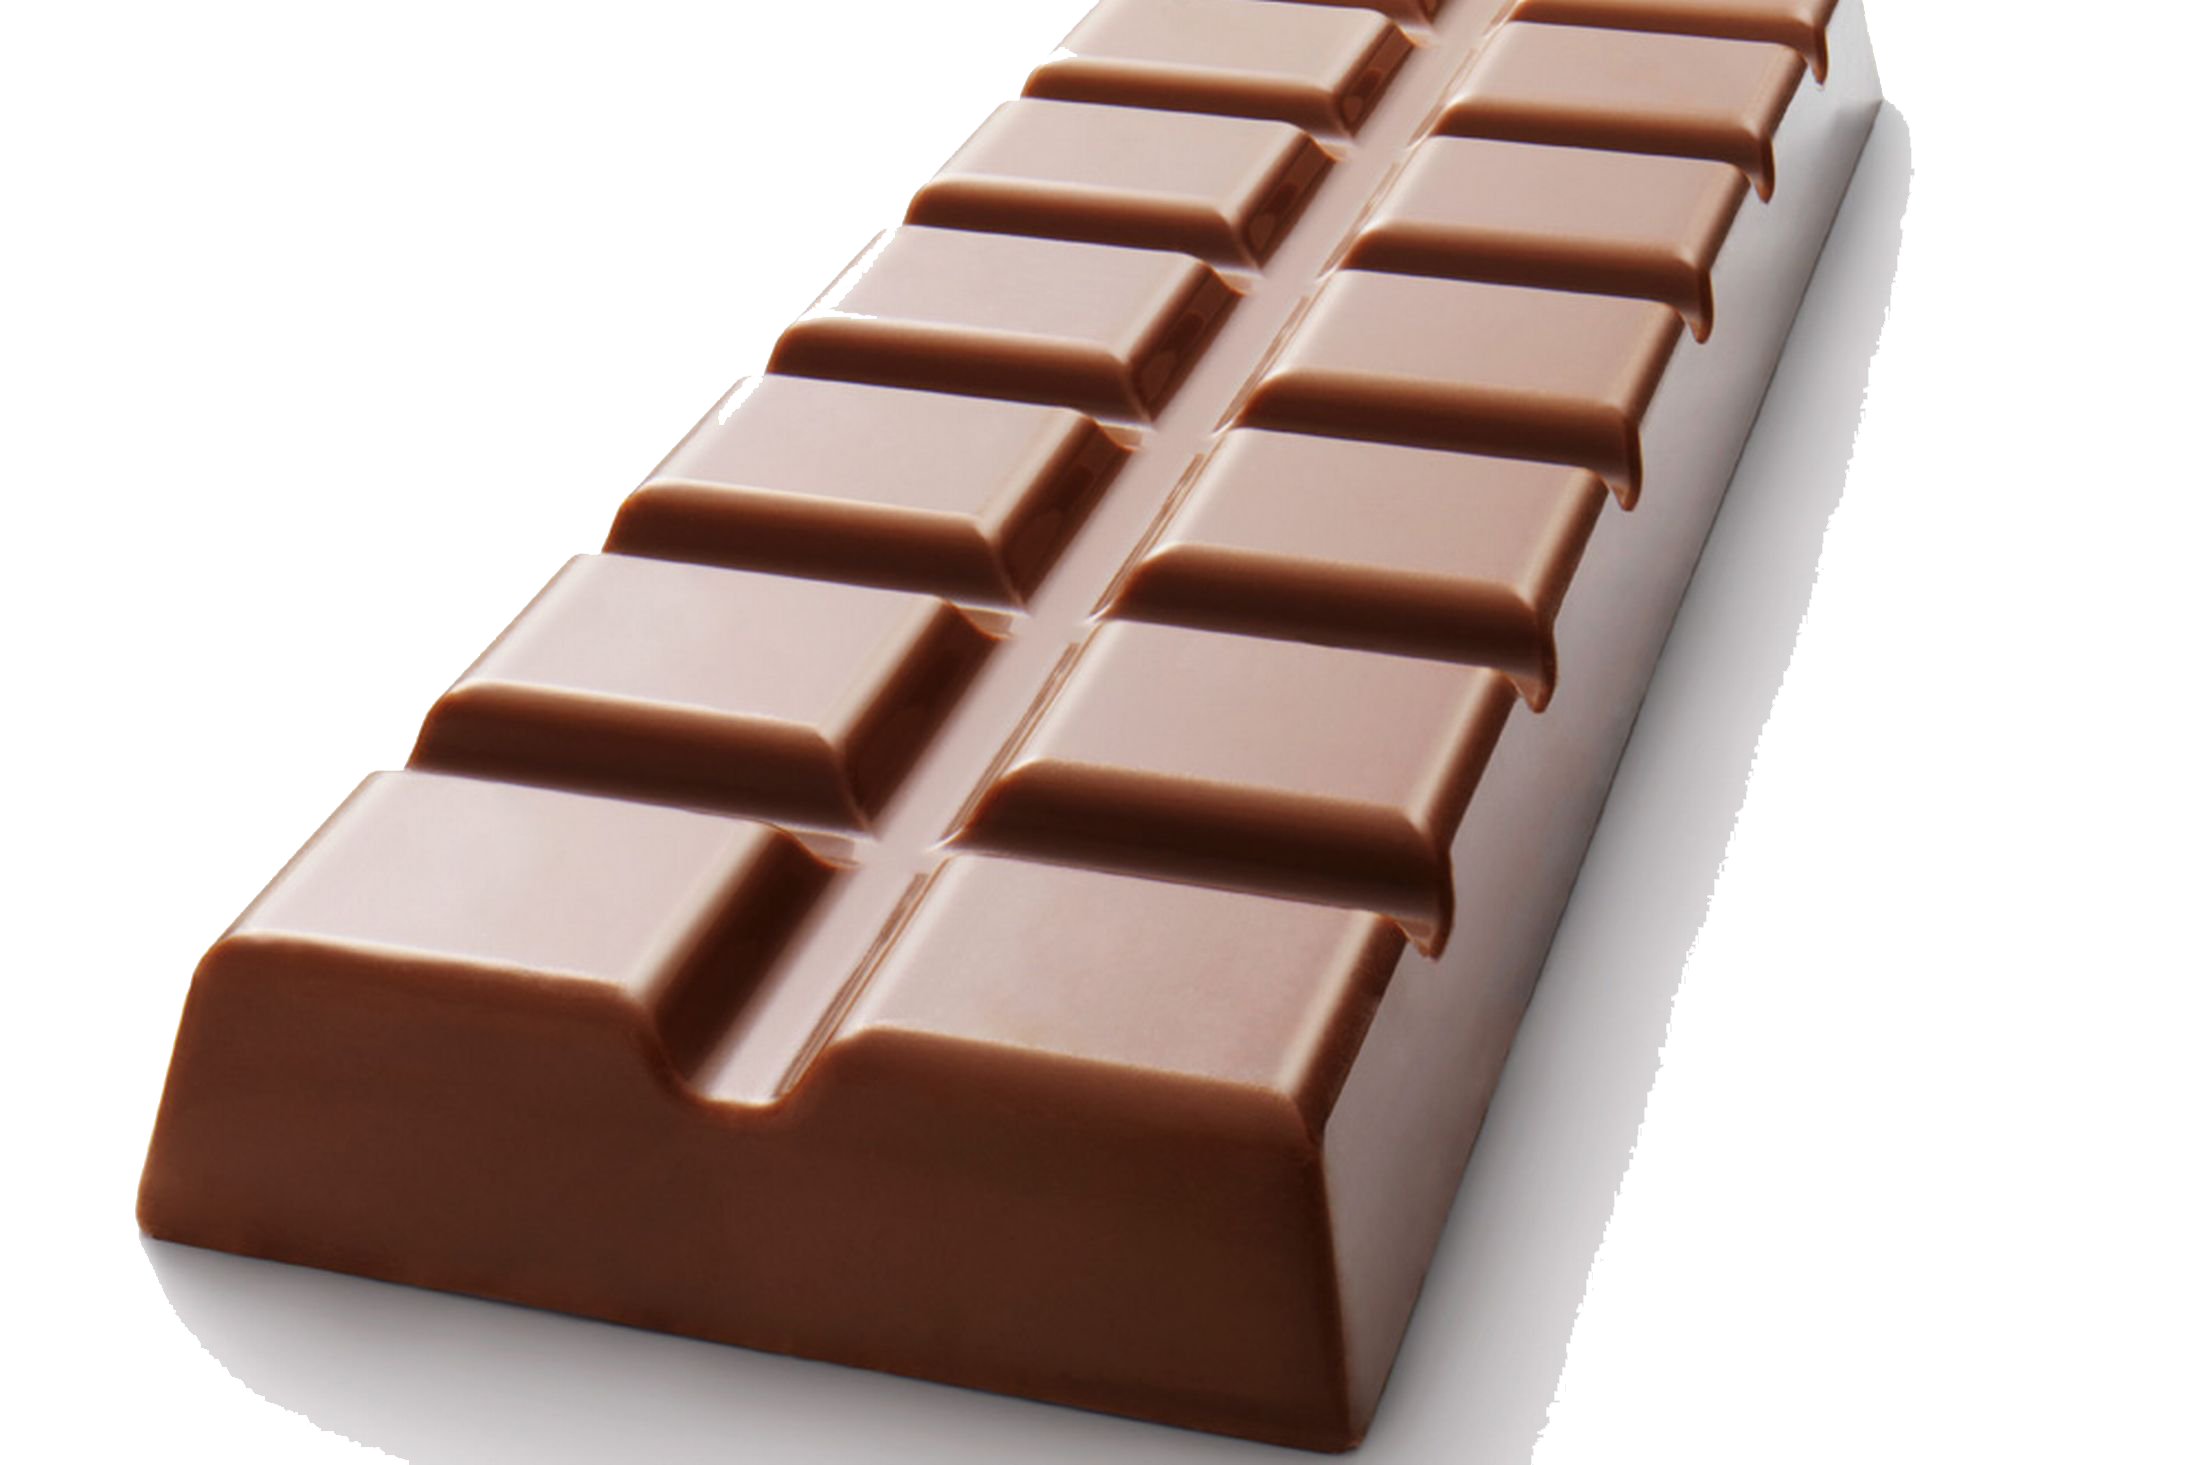 Chocolate bars PNG image